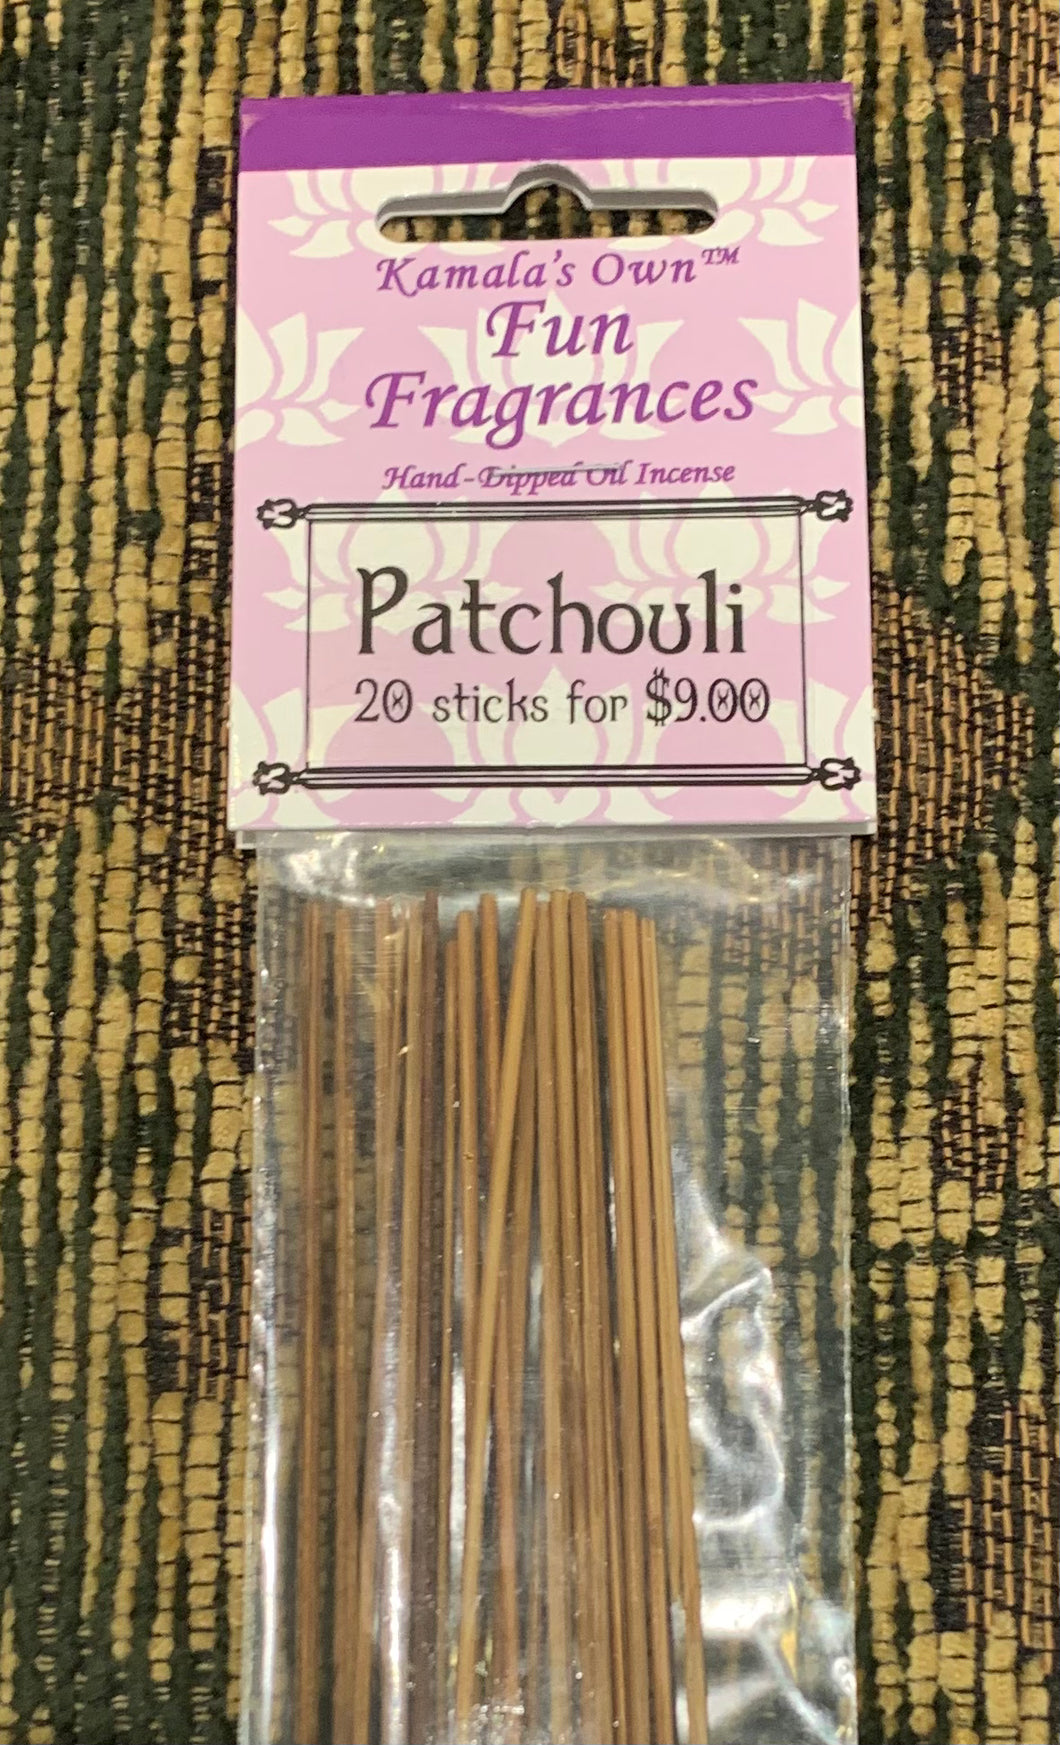 Patchouli sticks